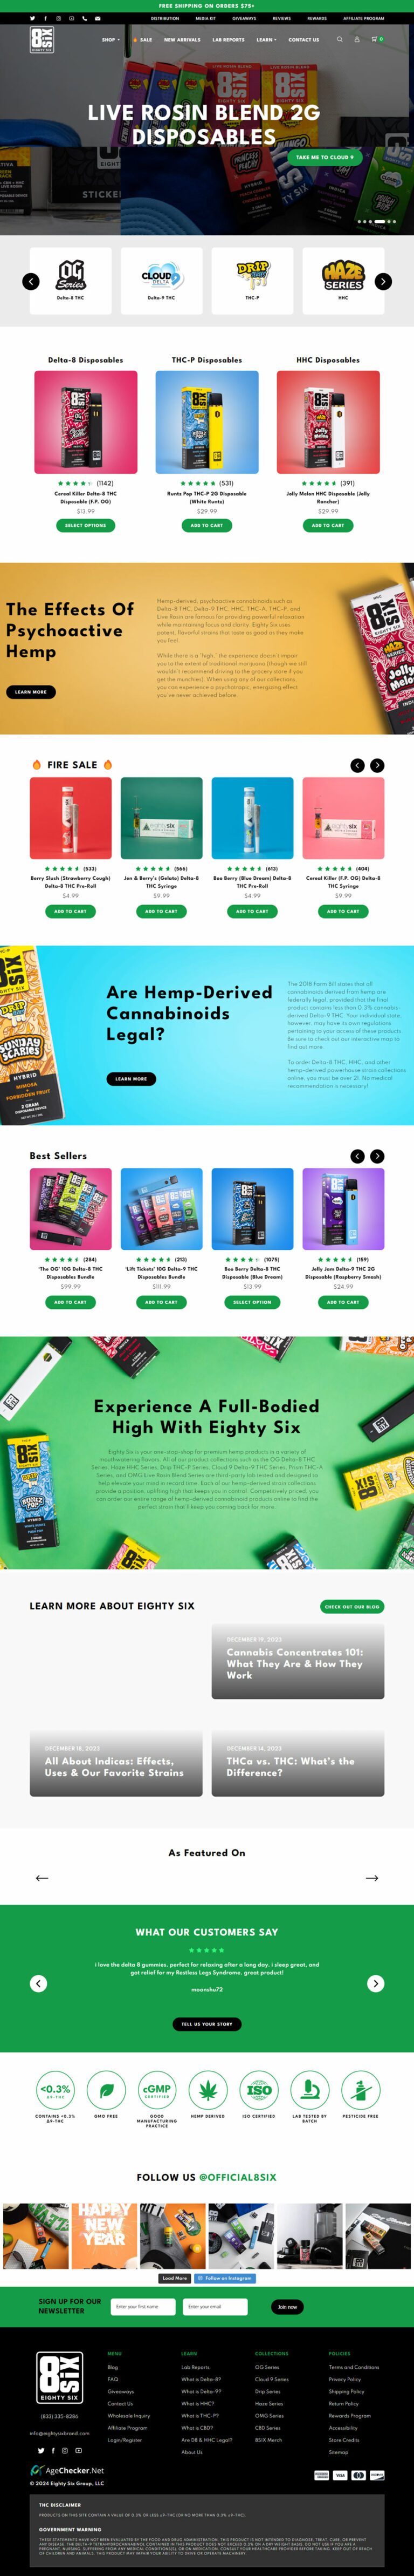 Newly designed homepage for CBD company Eighty Six Brand